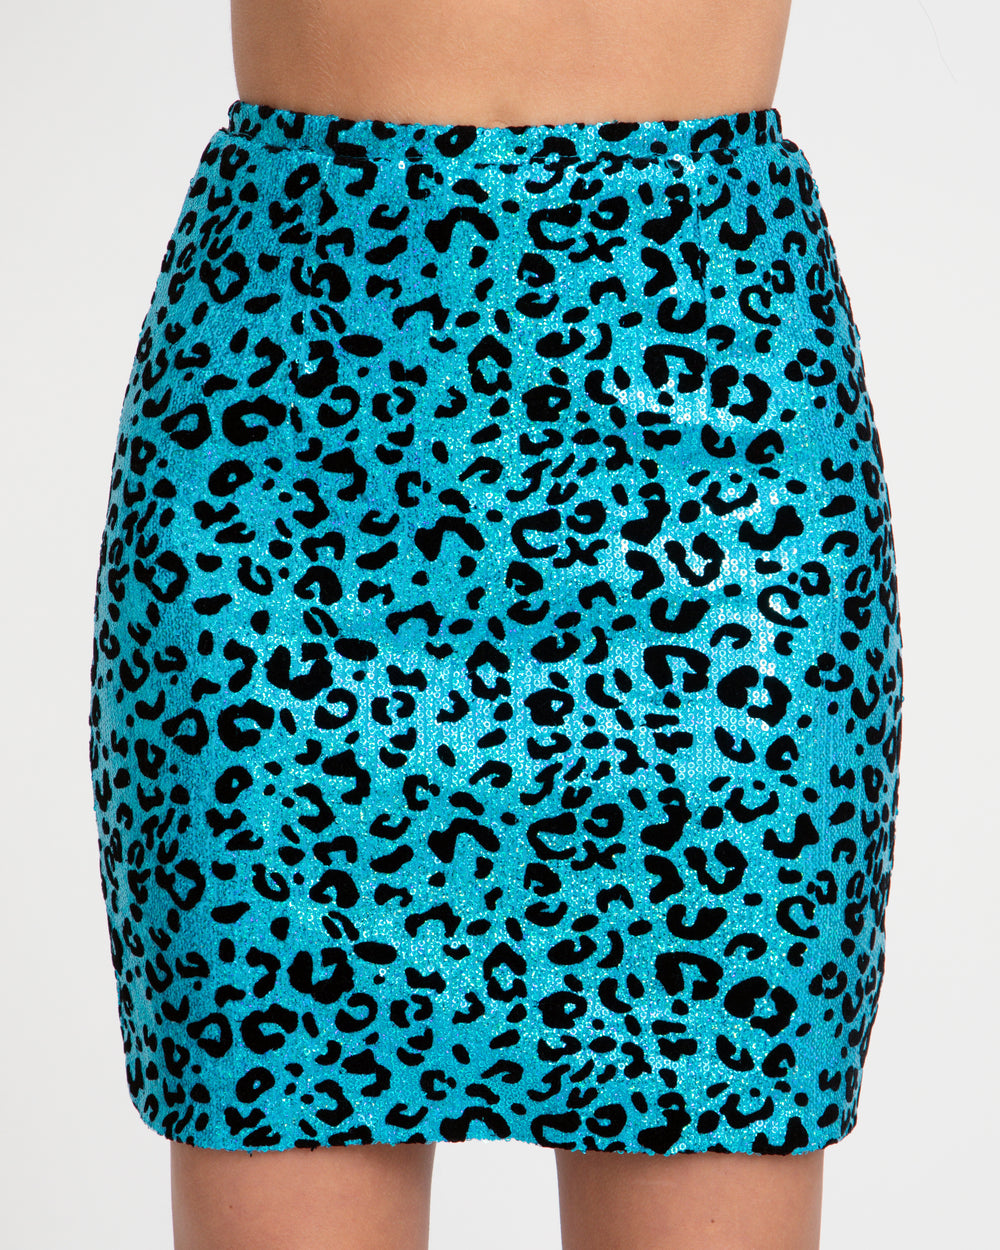 Holographic Leopard Sequin Mini Skirt - Blue